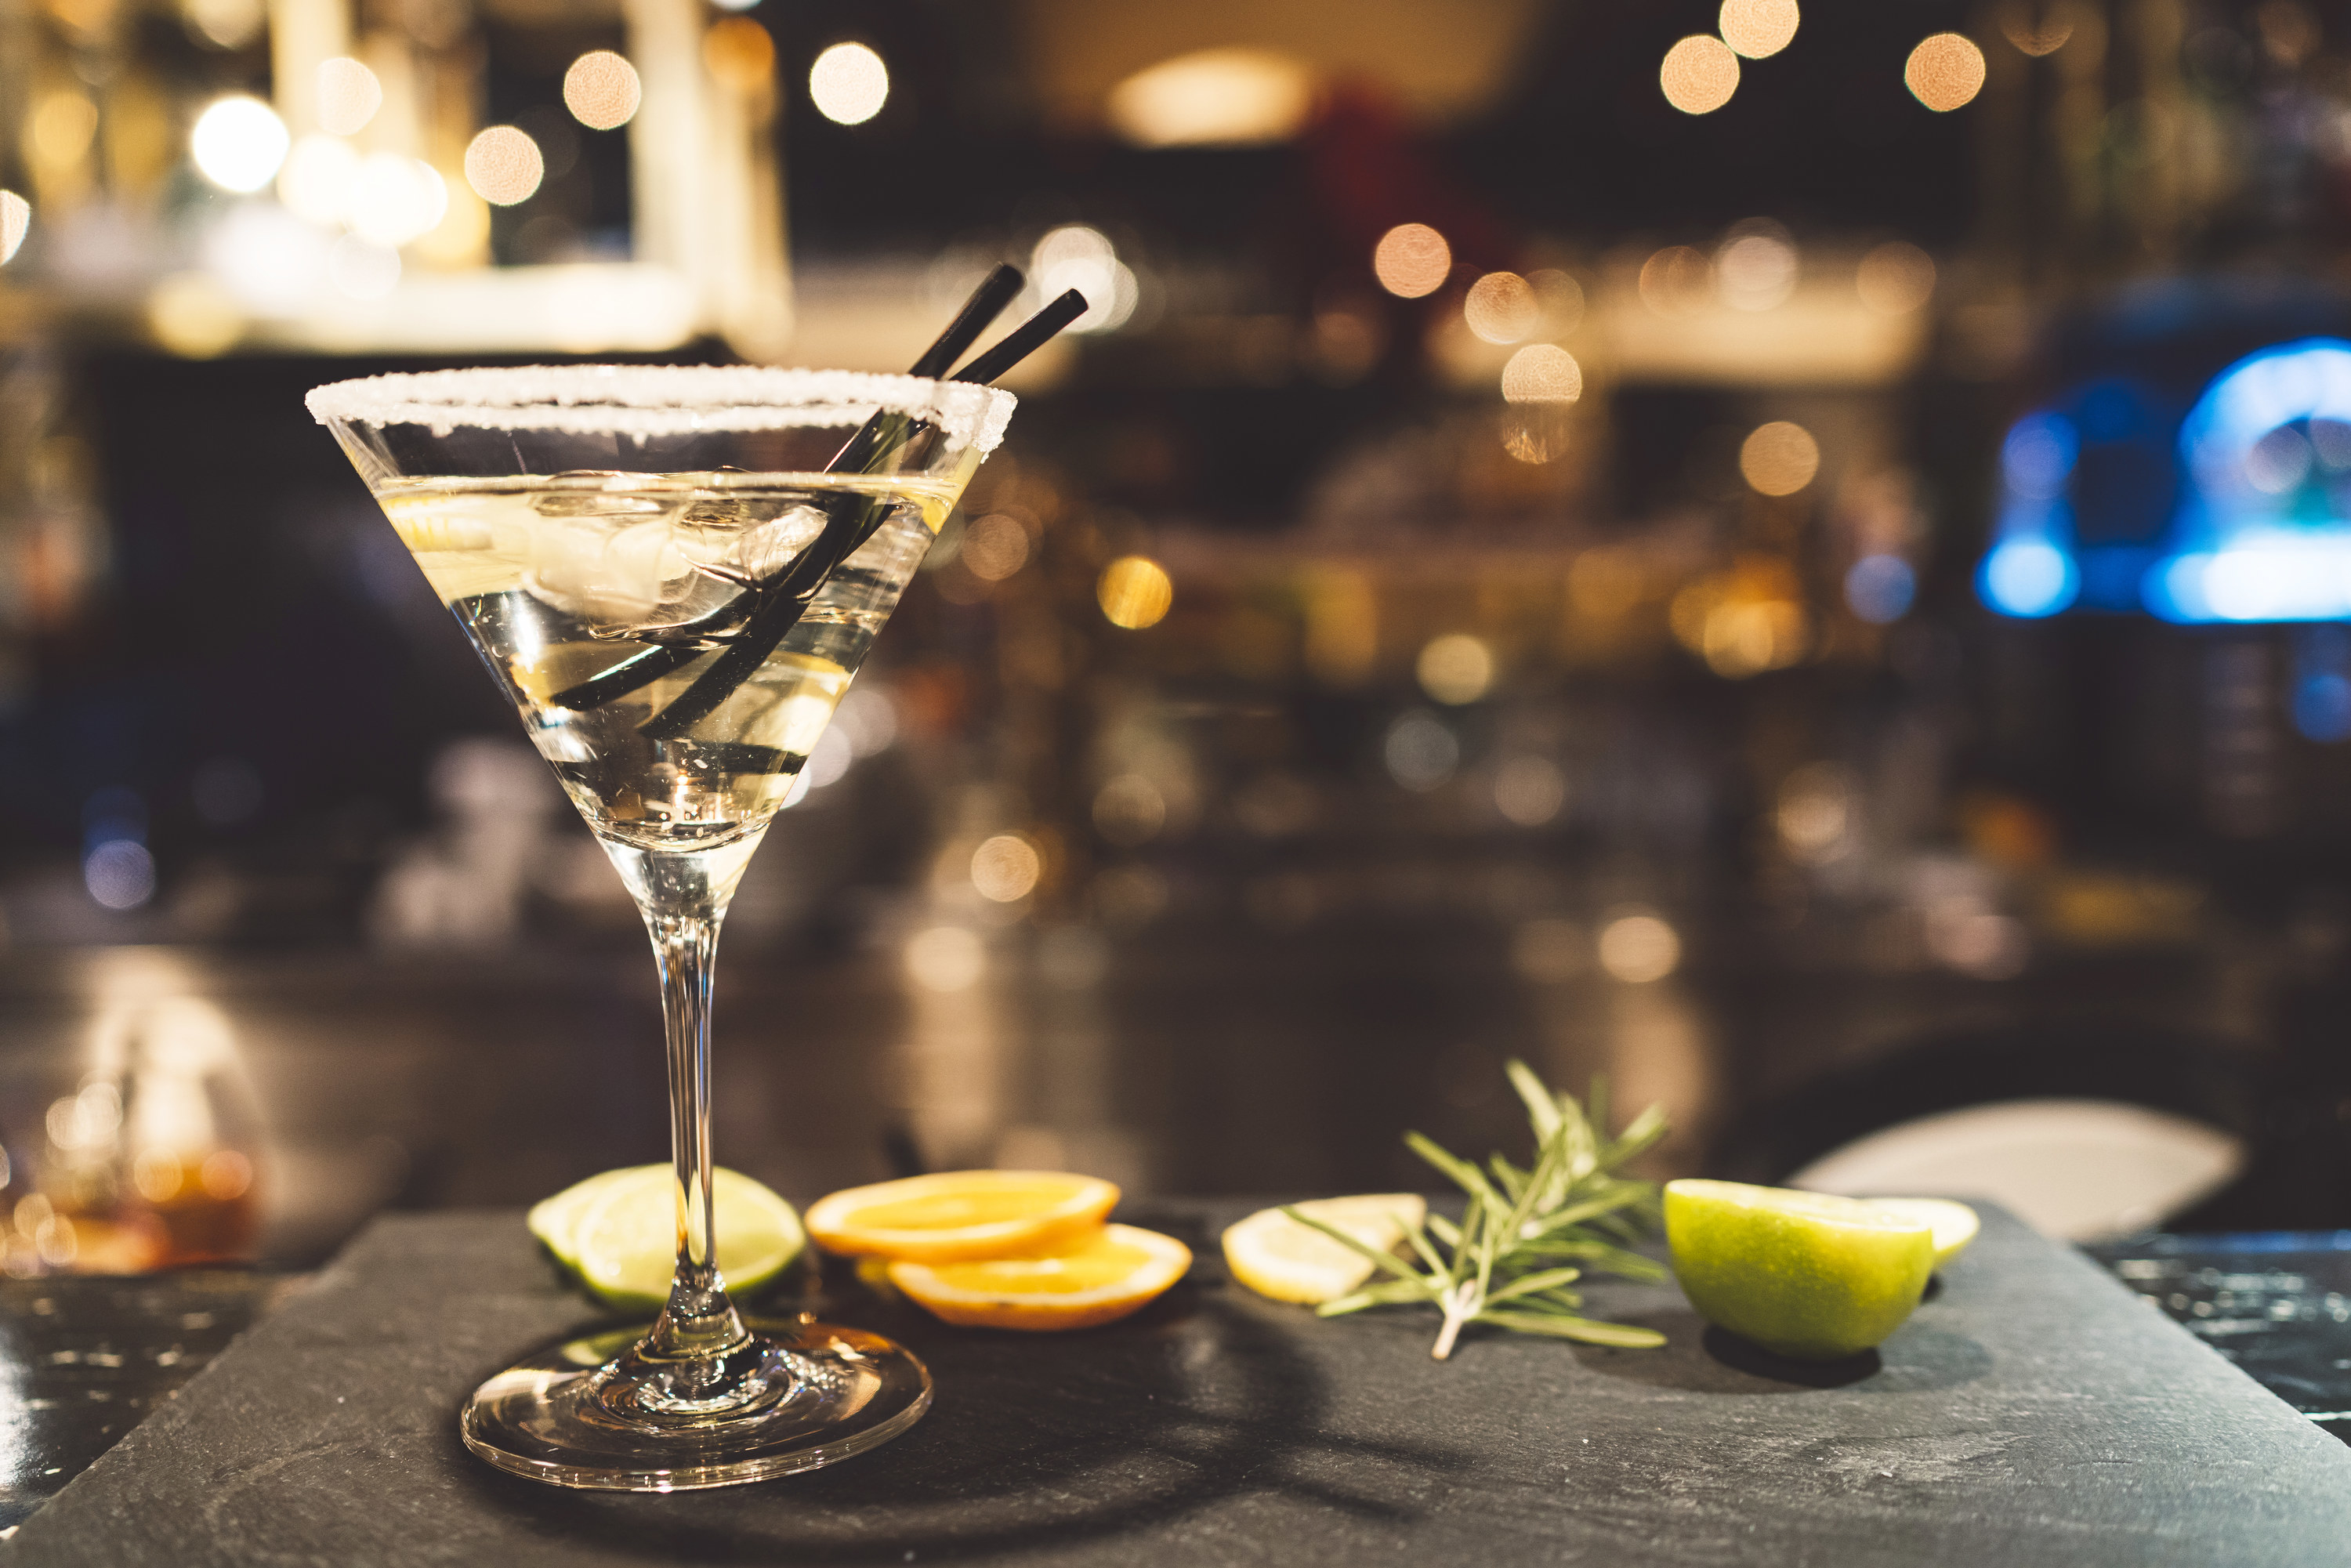 gin martini in a martini glass with garnishes